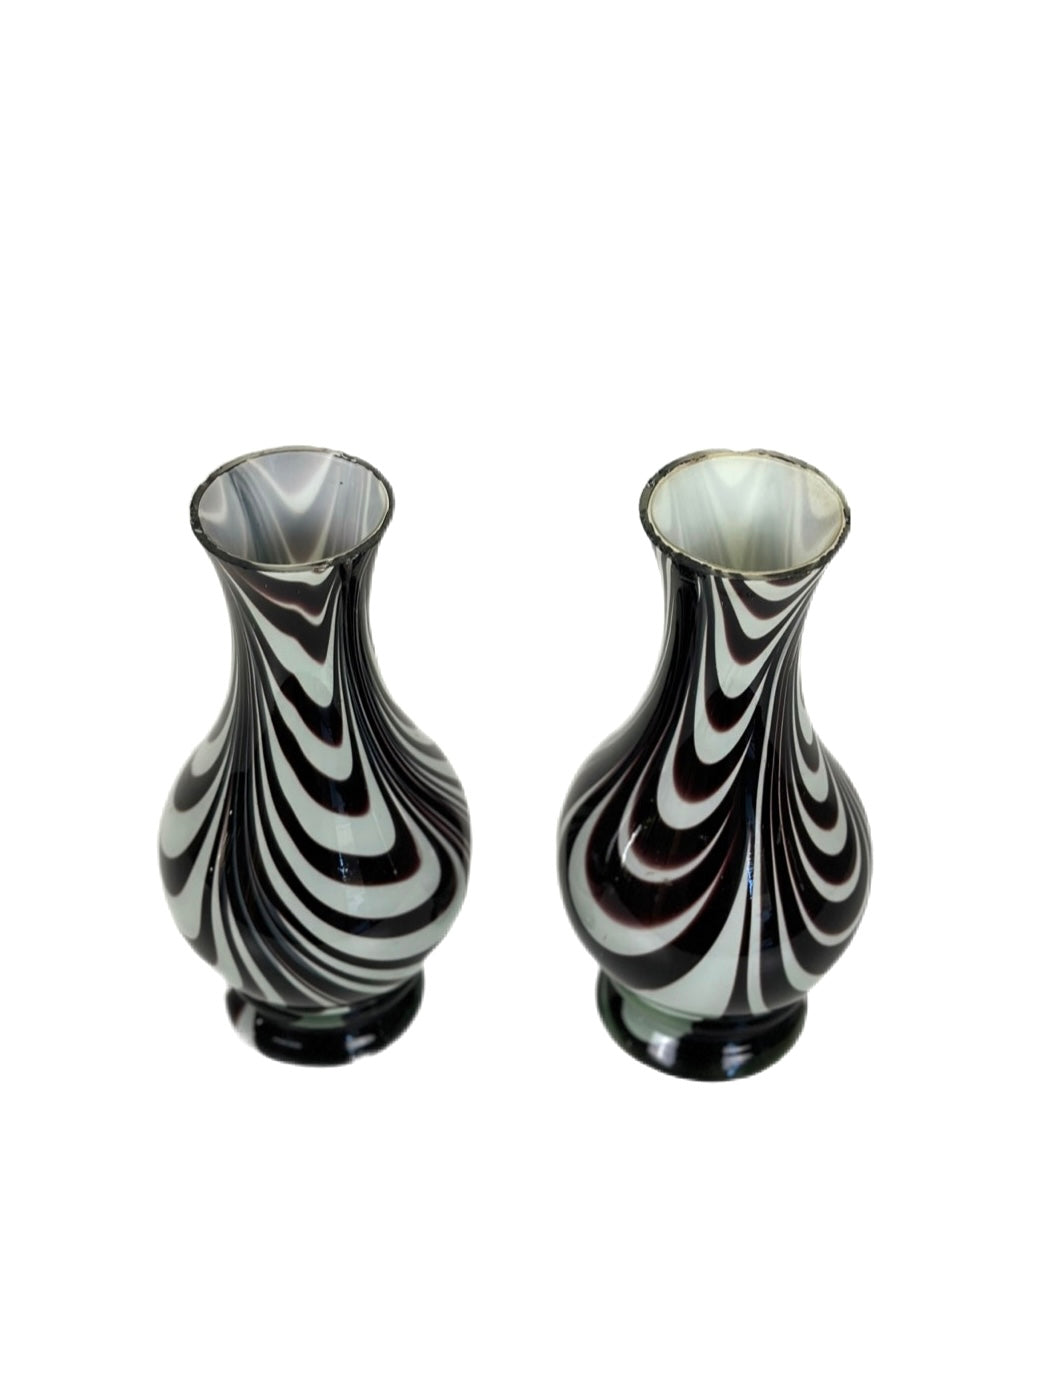 Pair Swirled vases